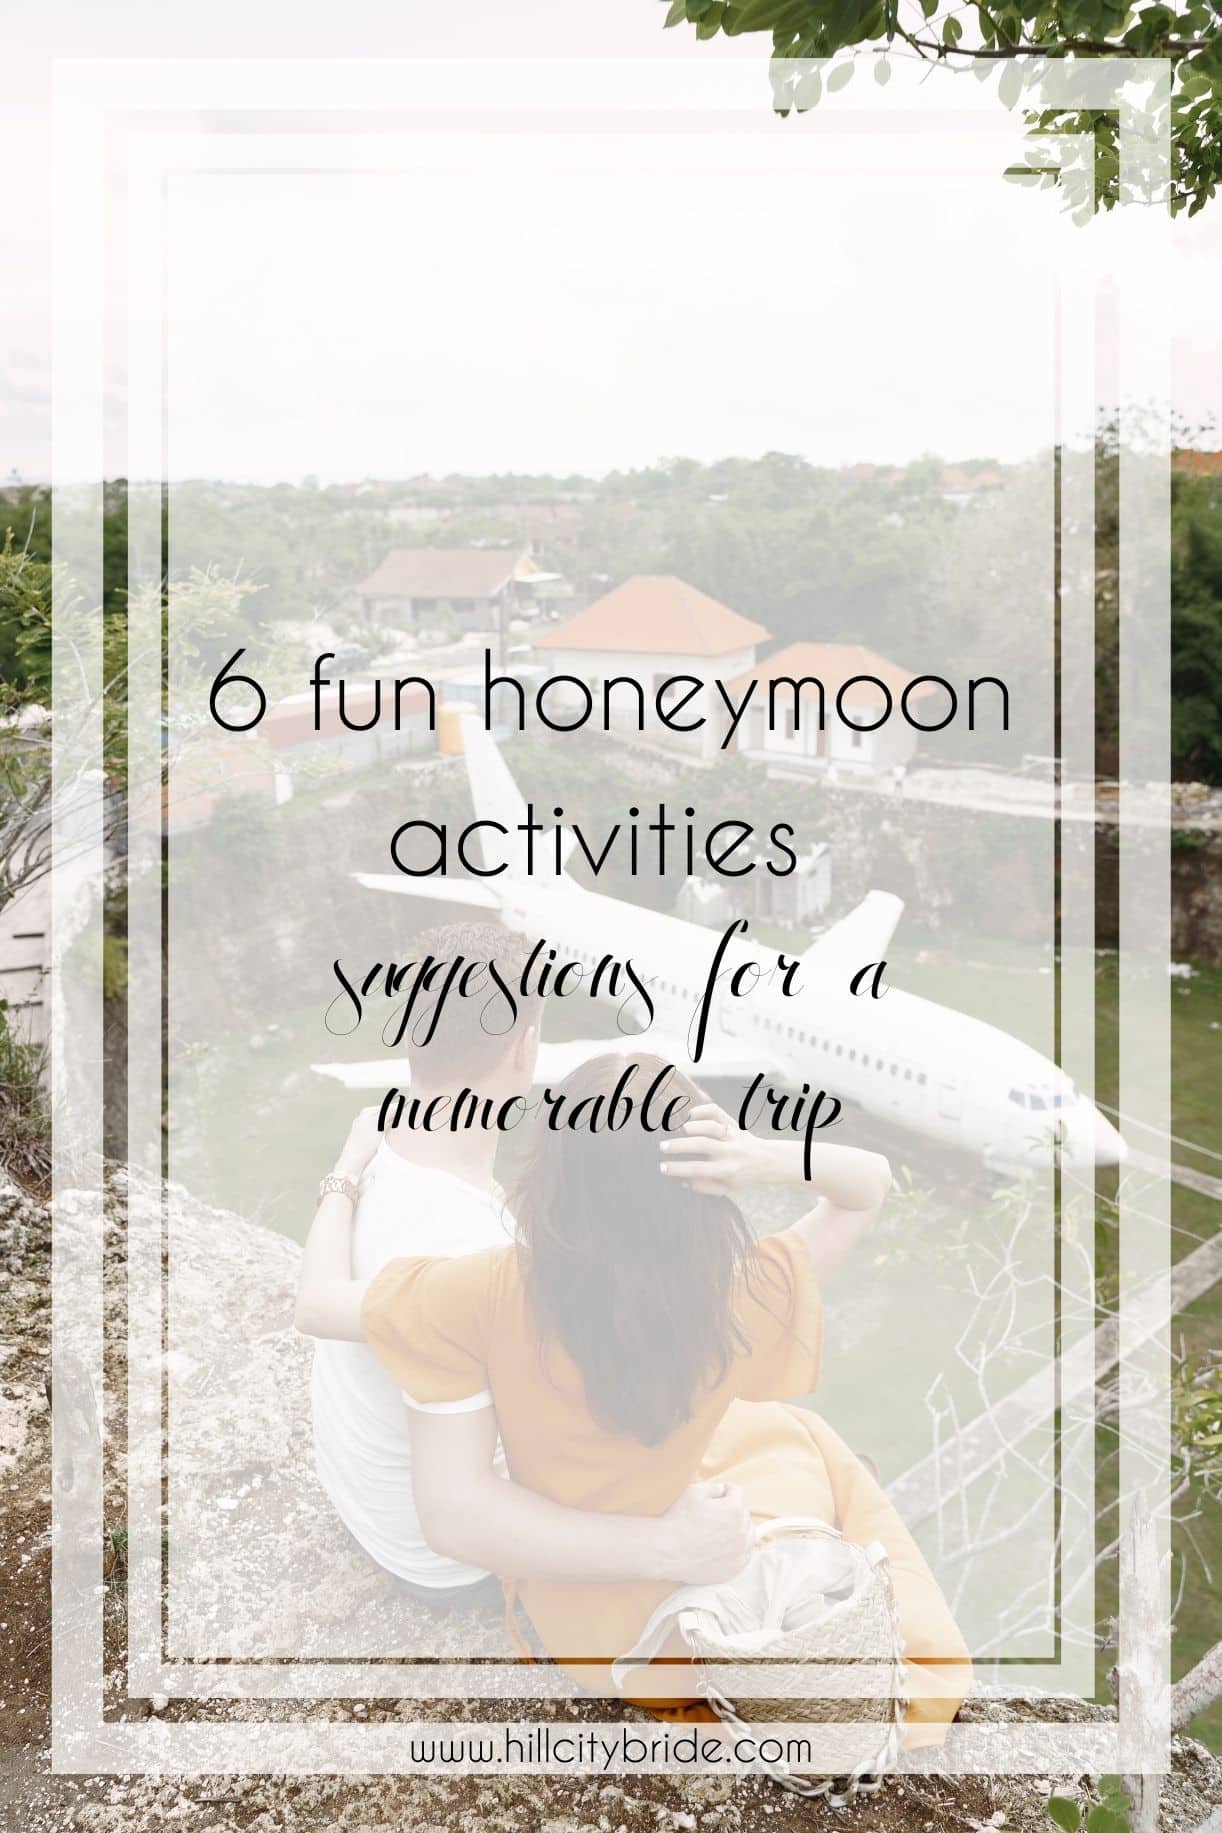 6 Must-Do Fun Honeymoon Activities to Try With Your Partner